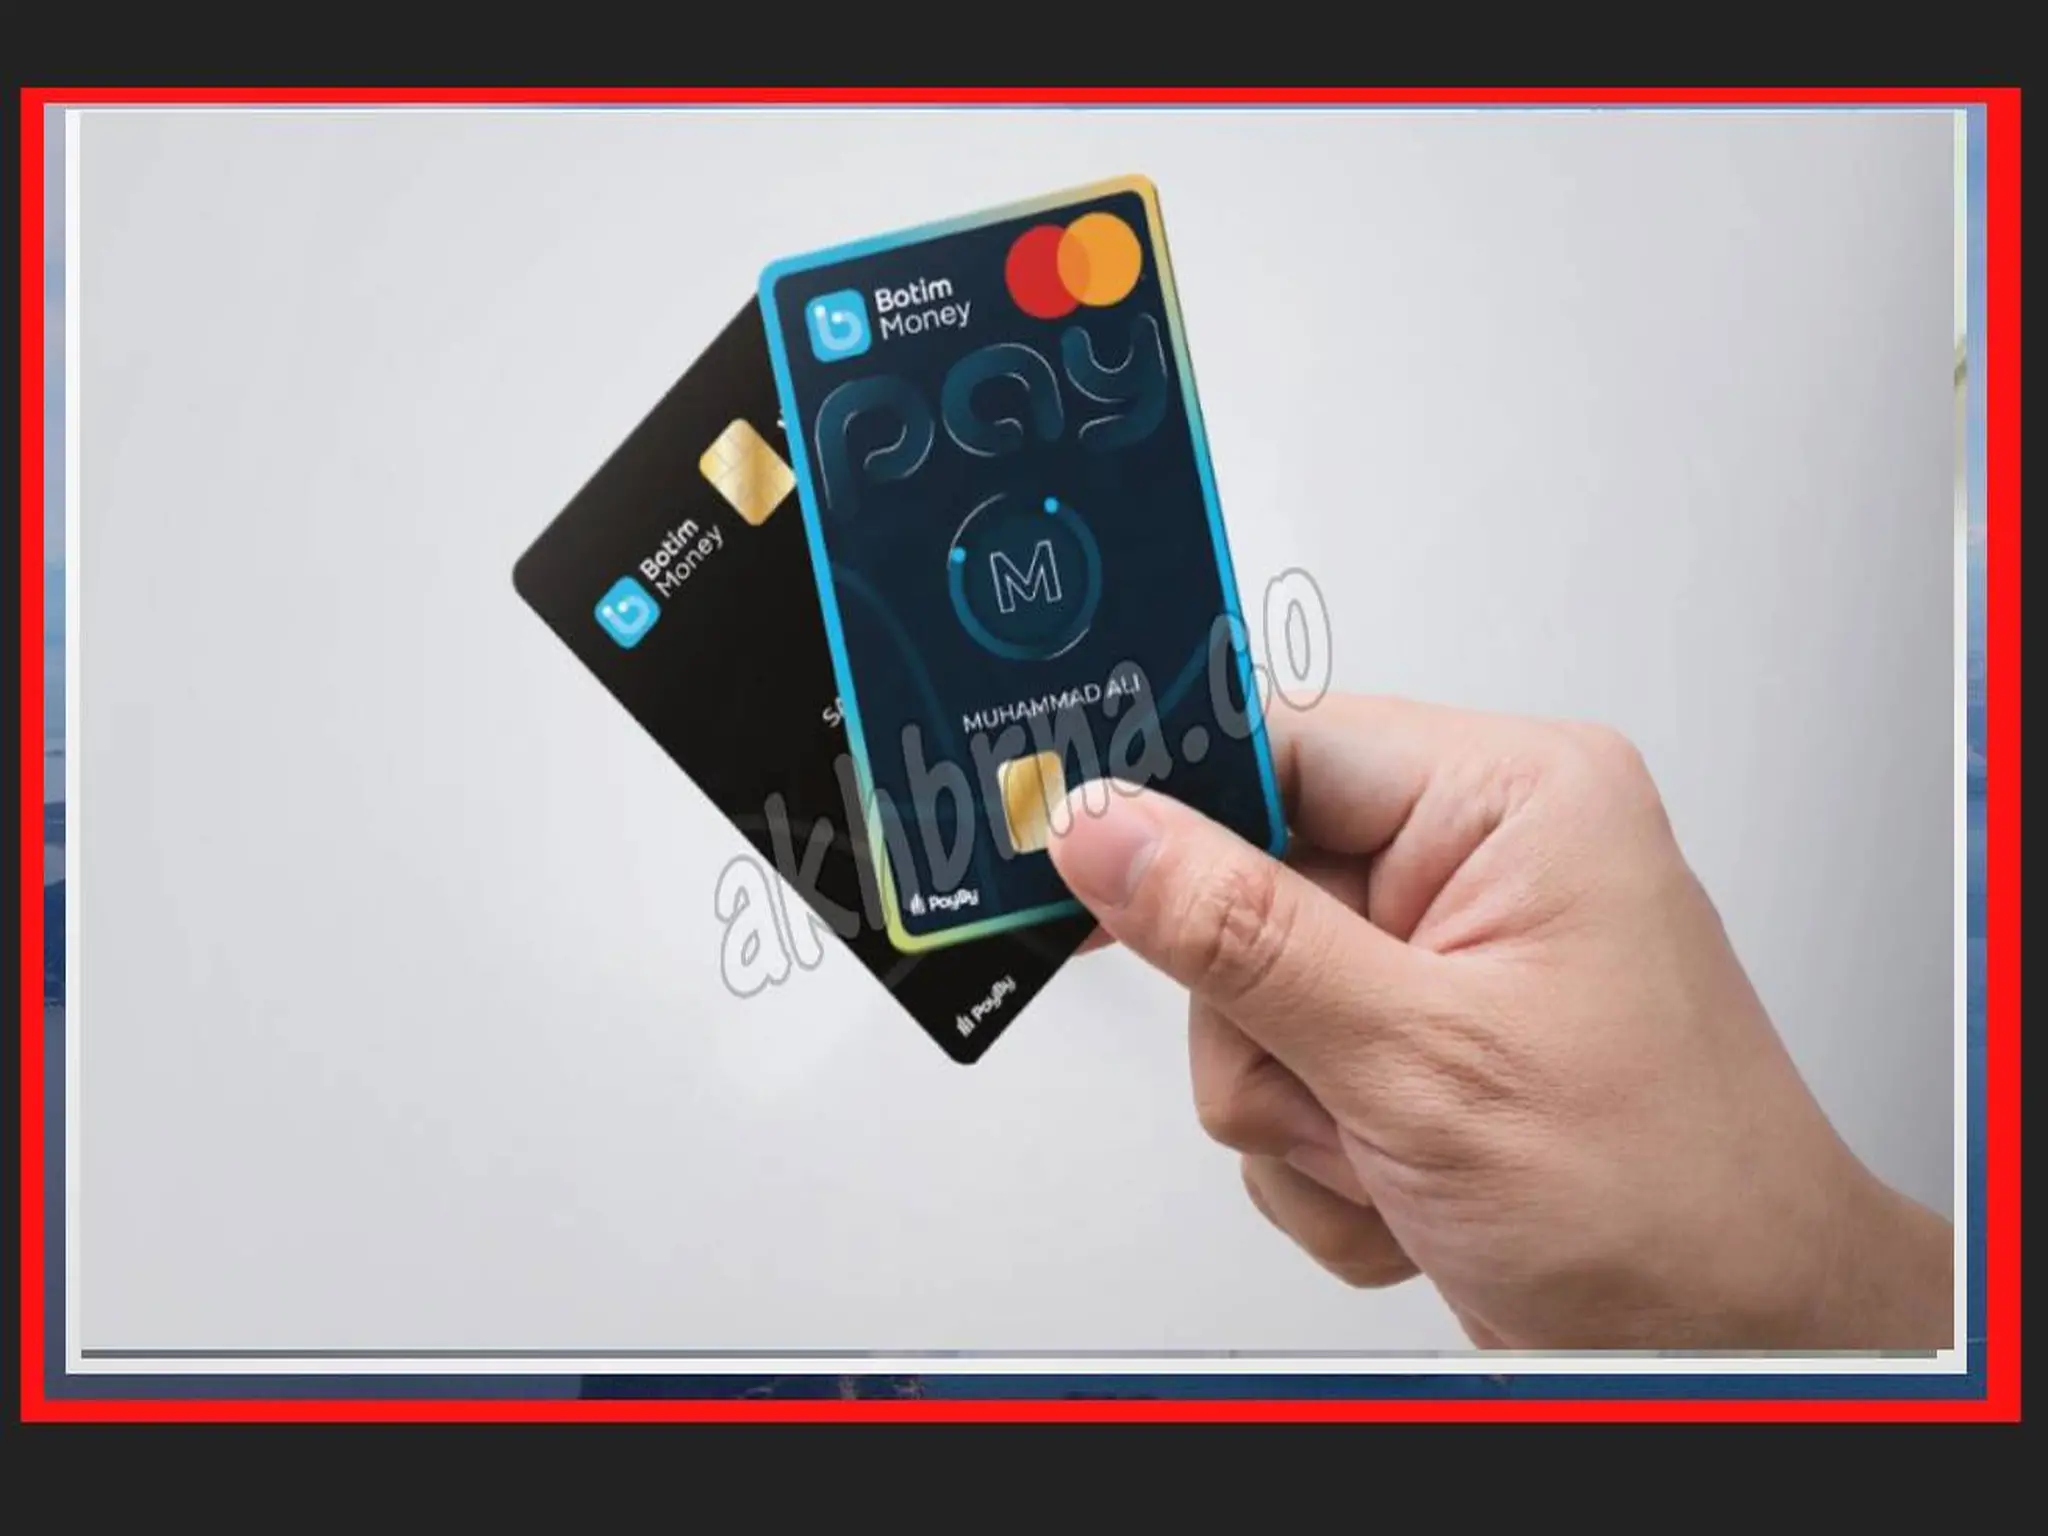 How to Activate Botim Money Prepaid Card in UAE